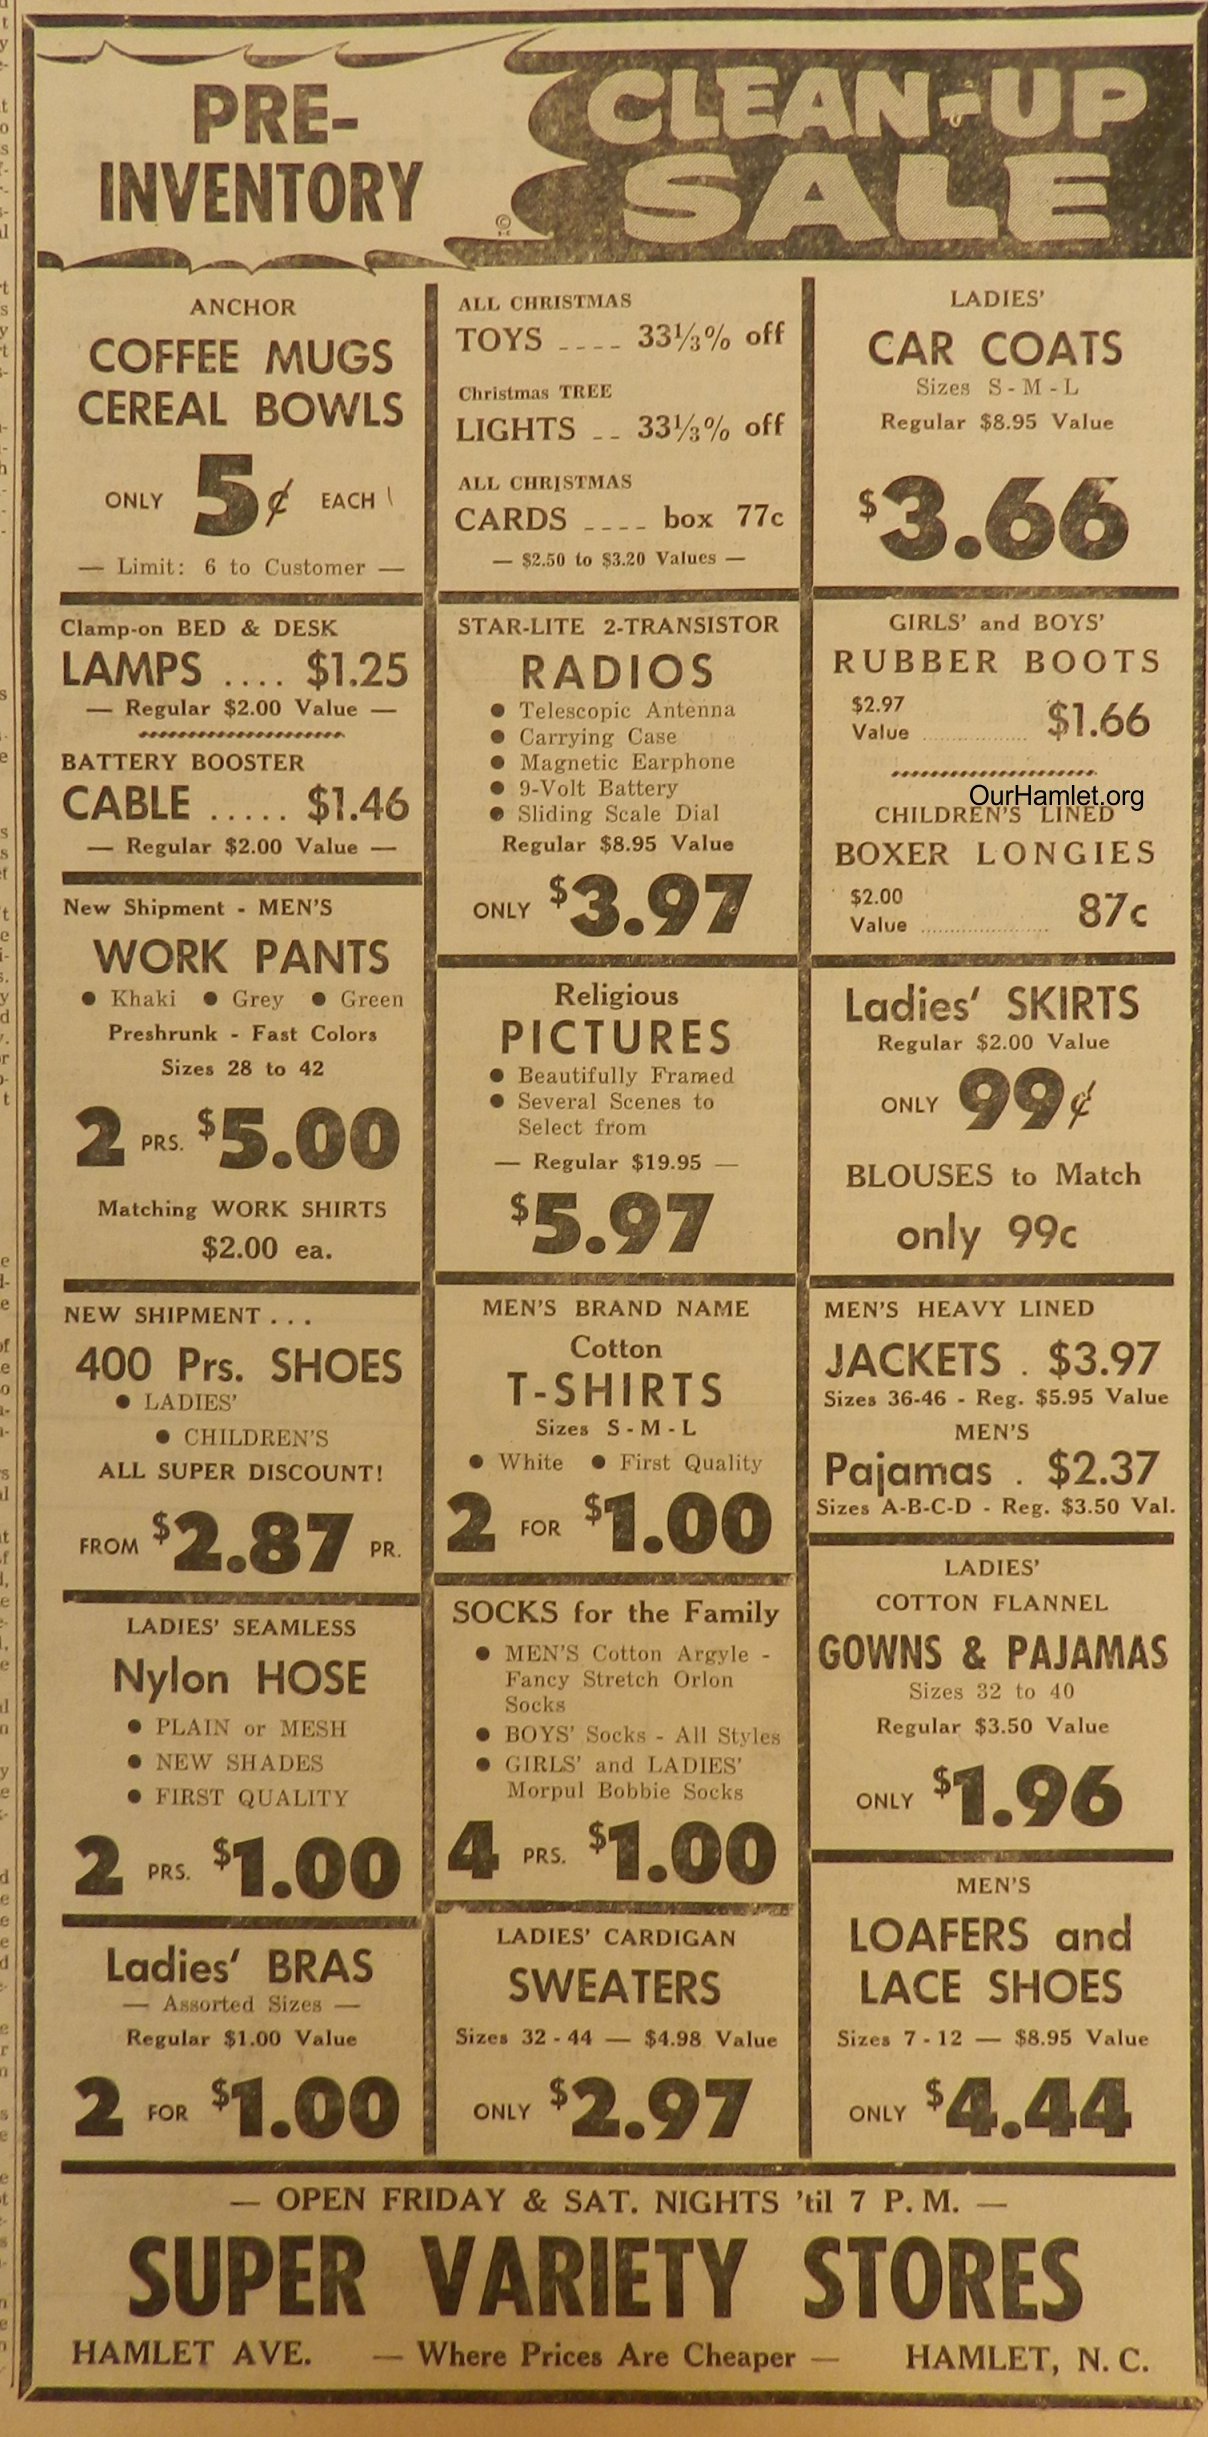 1964 Super Variety Stores OH.jpg